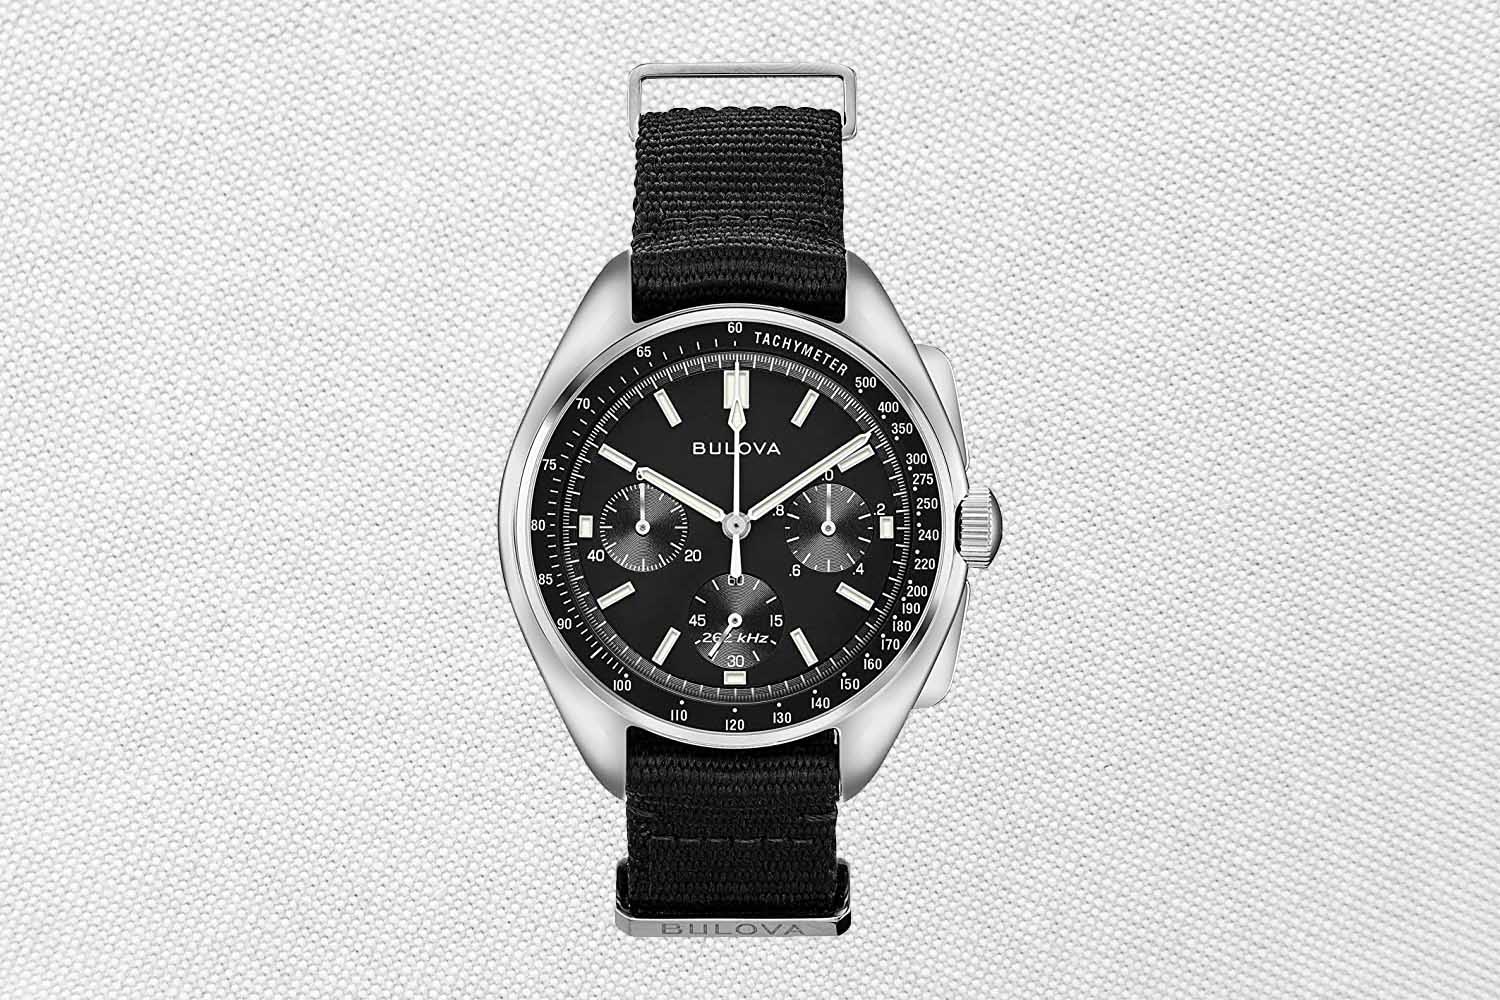 Bulova Lunar Pilot, one of the best watches under $1,000